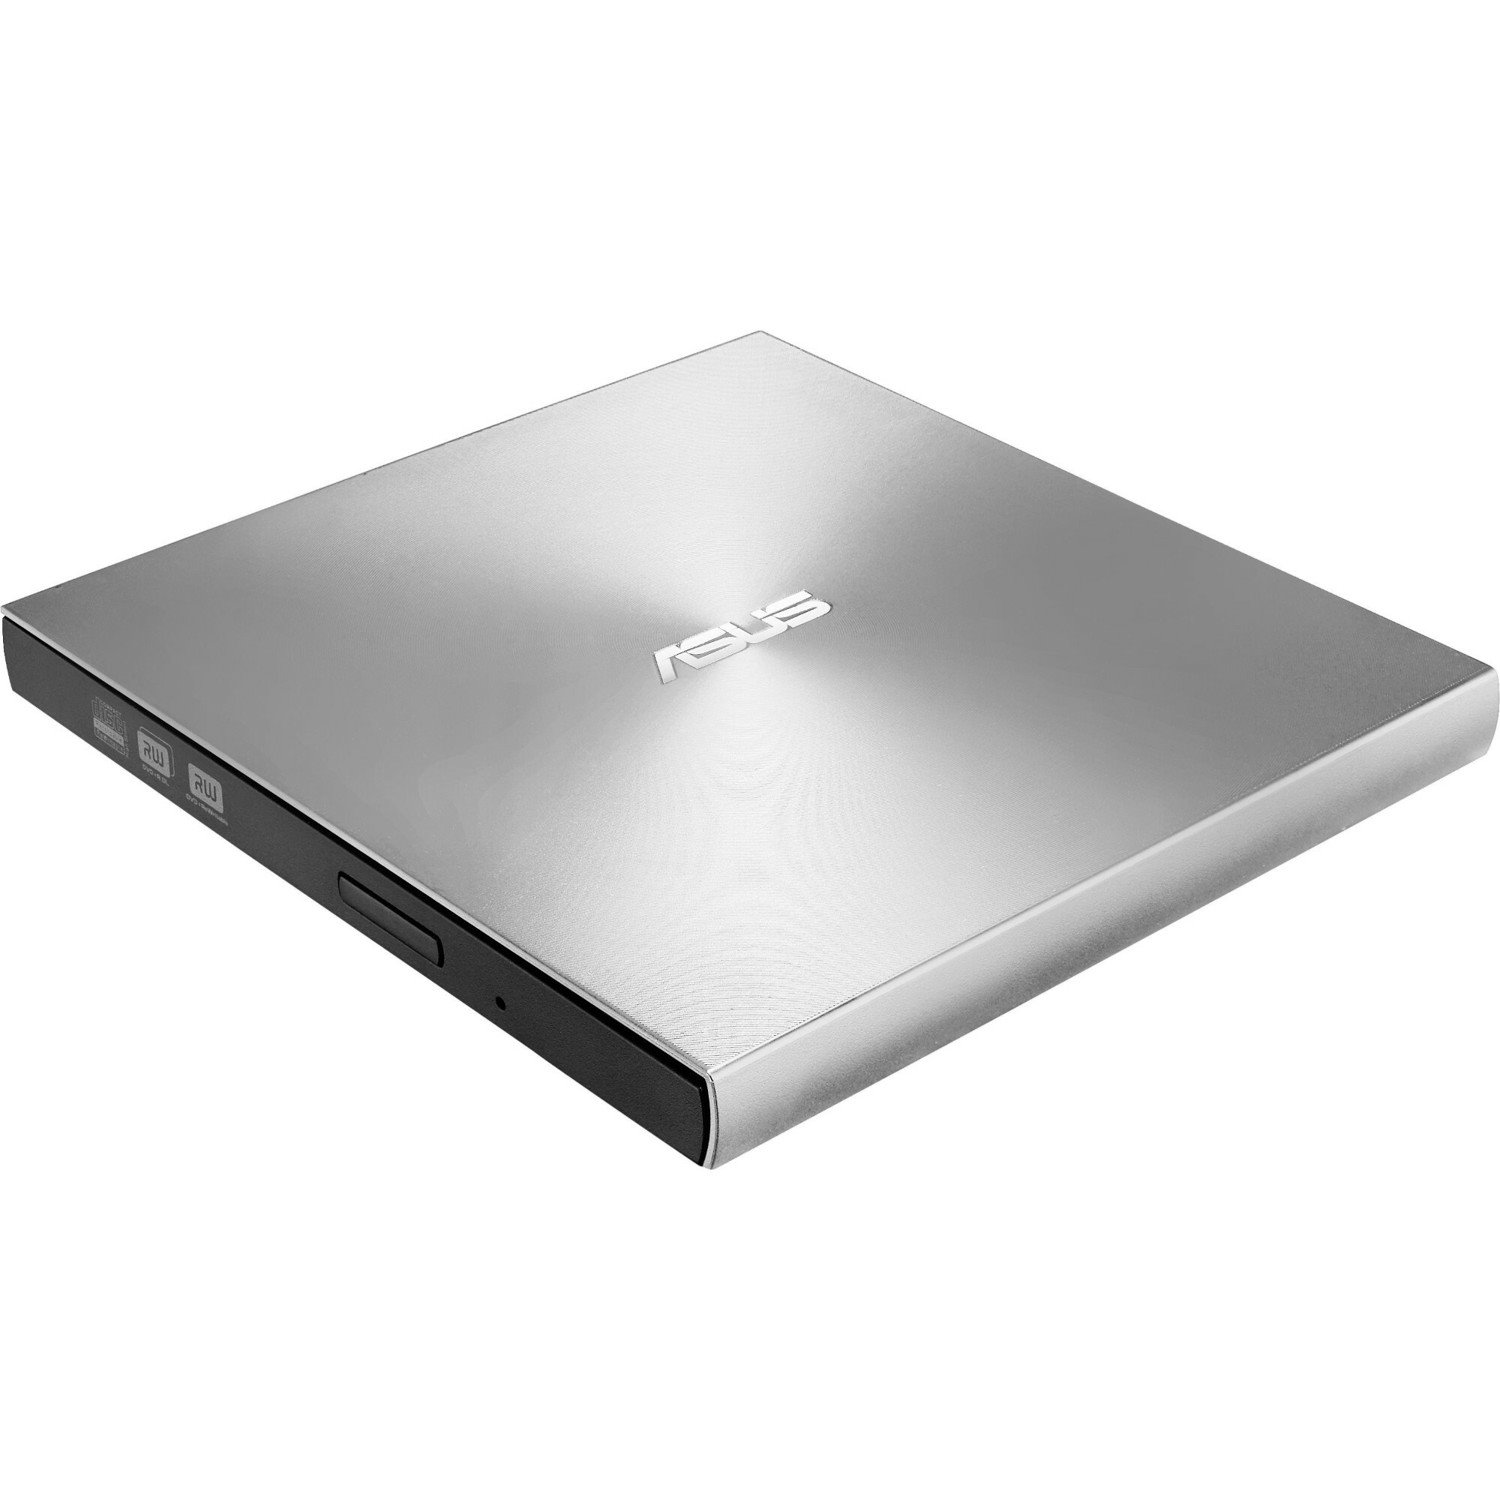 Asus ZenDrive DVD-Writer - External - Retail Pack - Silver